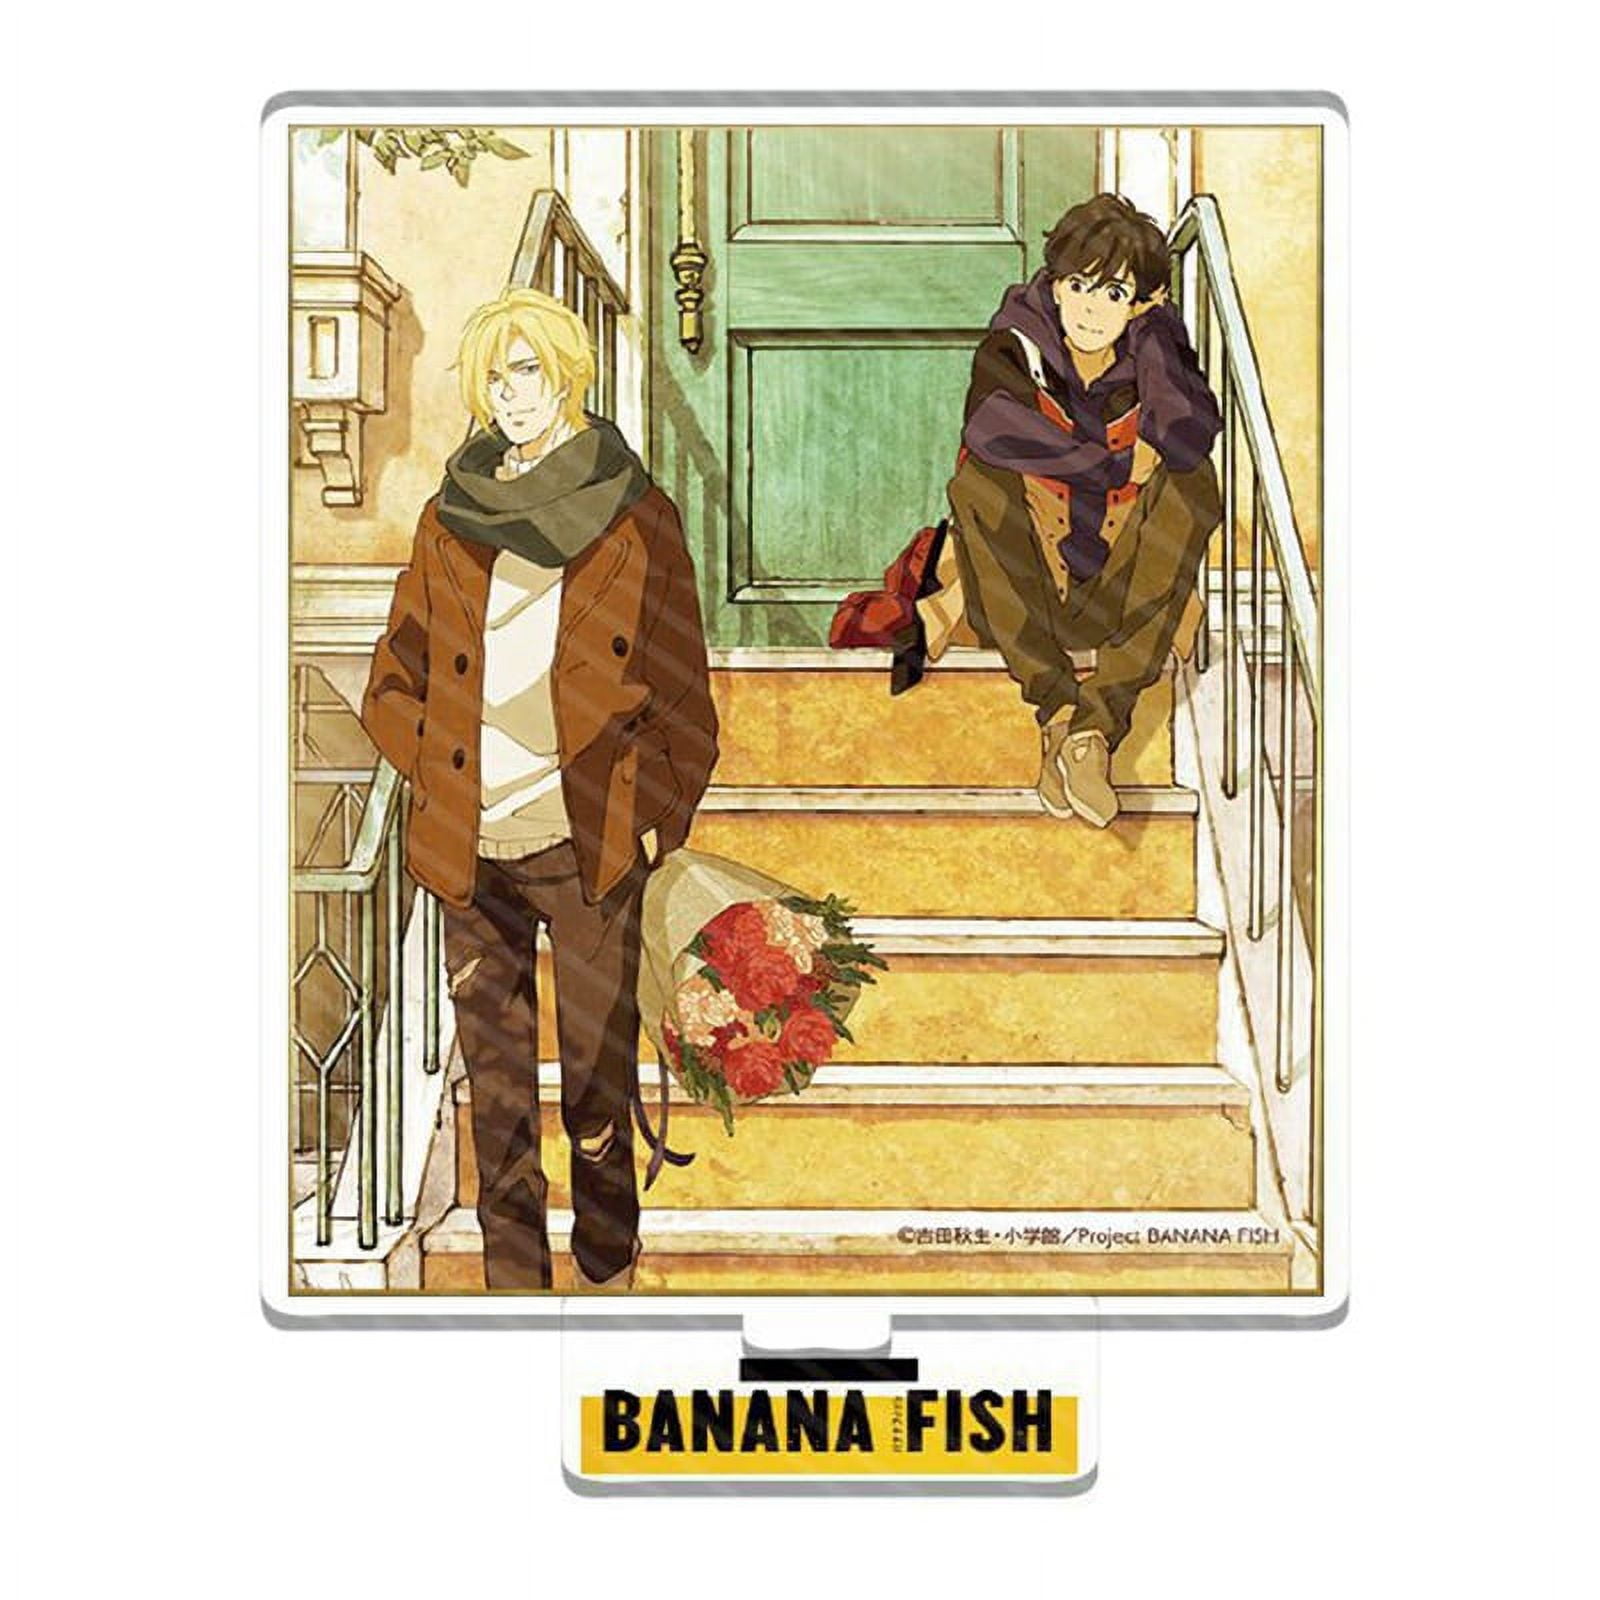 5 Anime Like Banana Fish - ReelRundown